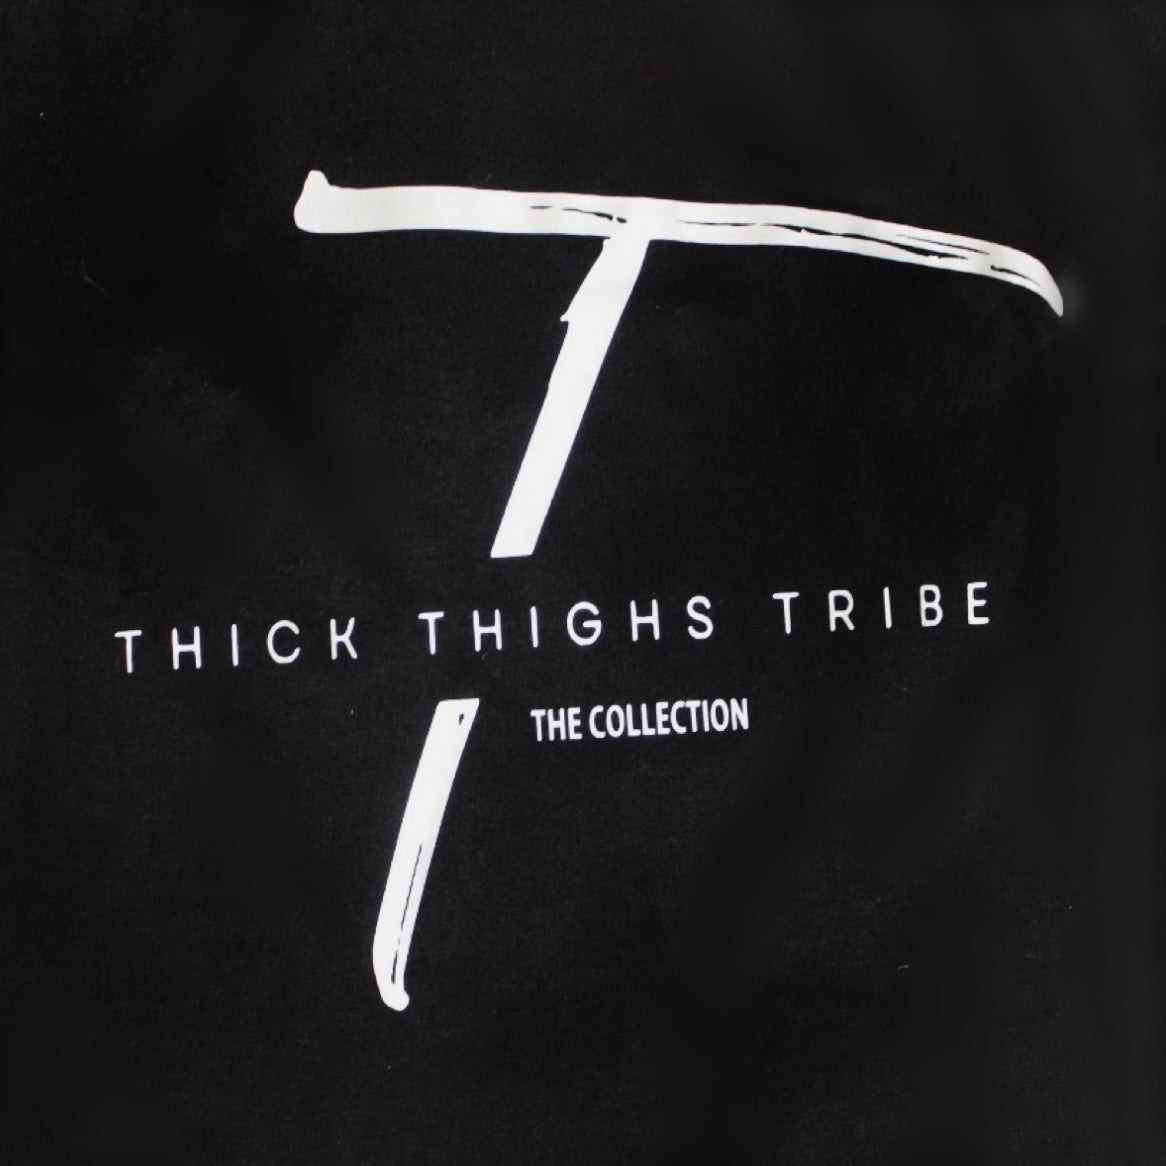 Thick Thigh Tribe Tee - Black x Silver